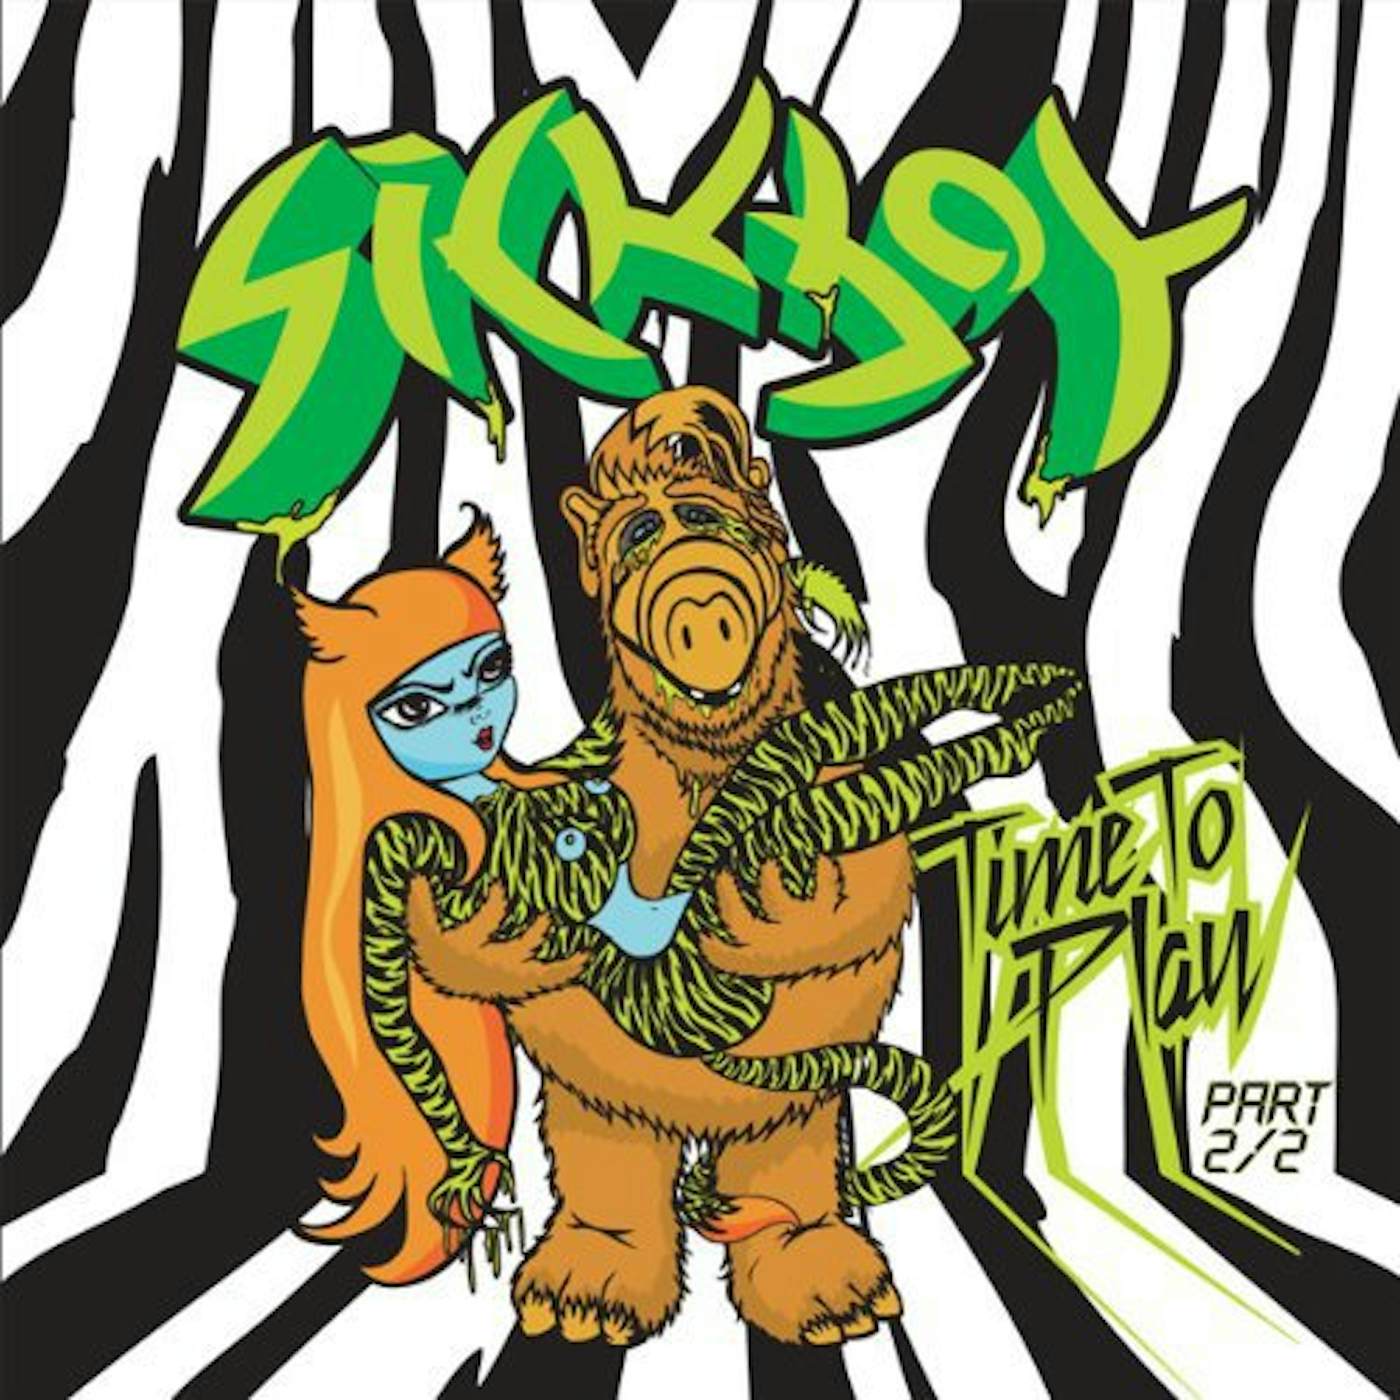 Sickboy TIME TO PLAY 2 Vinyl Record